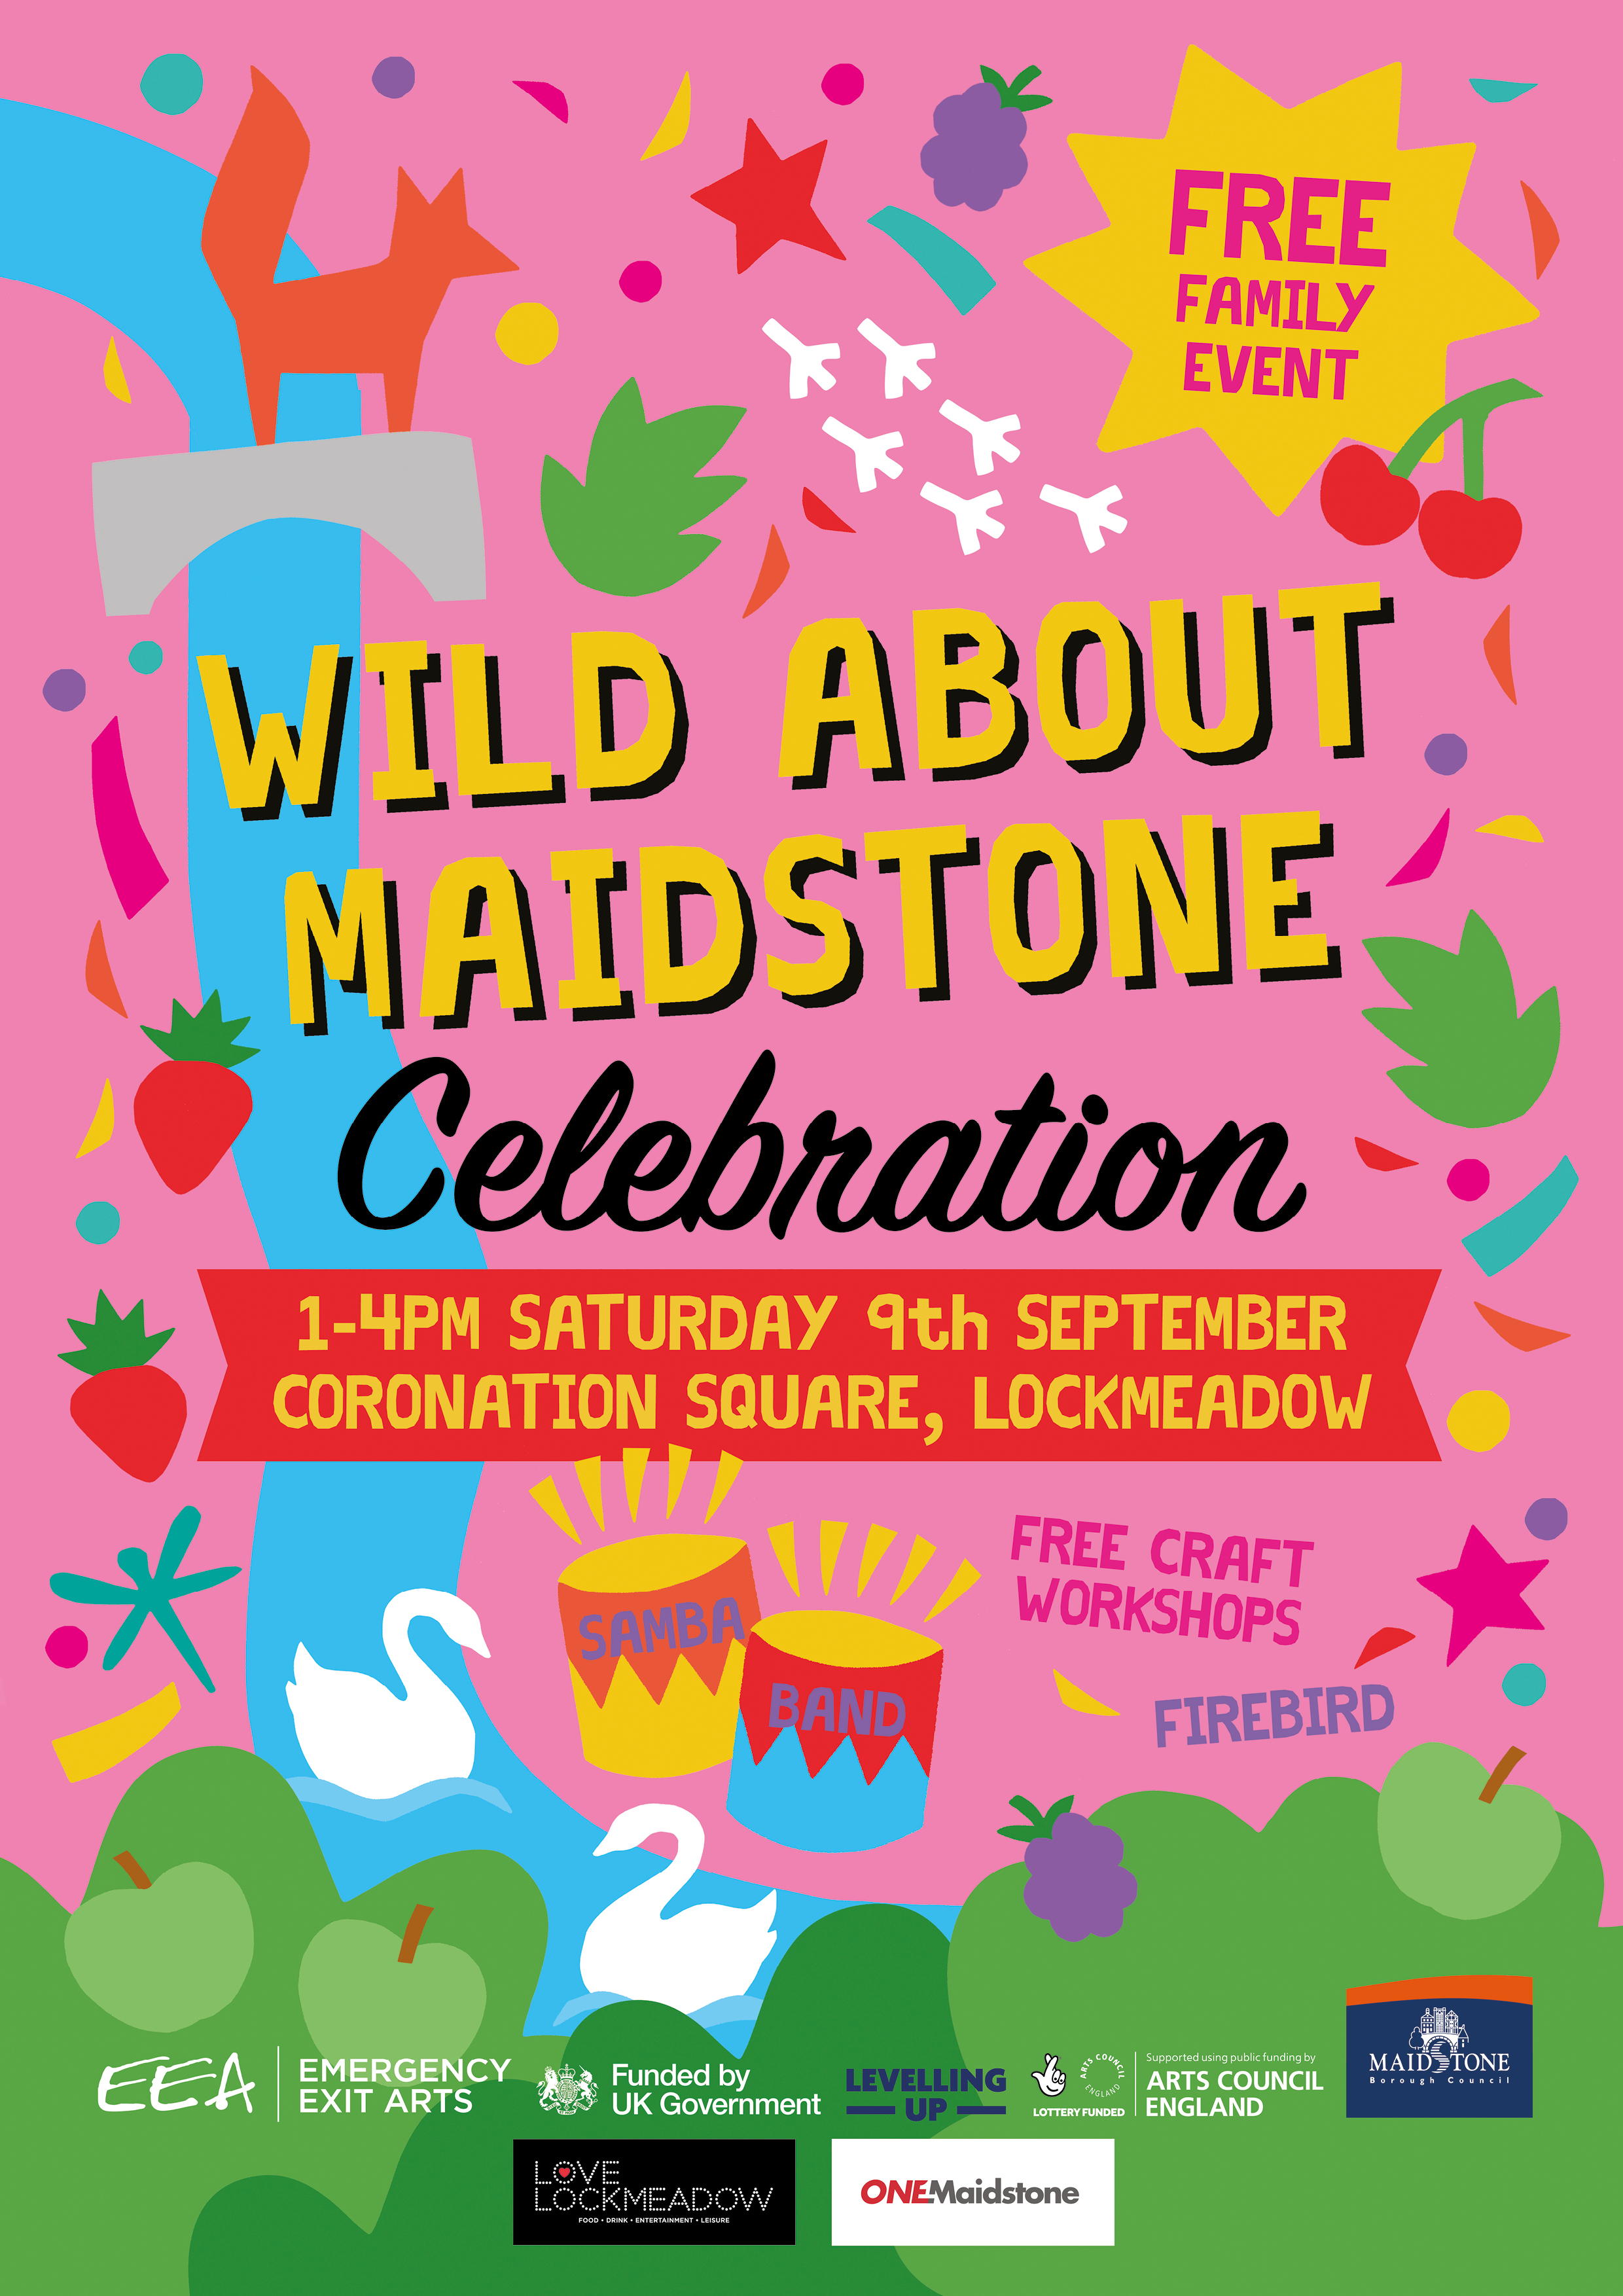  ‘Wild about Maidstone celebration’